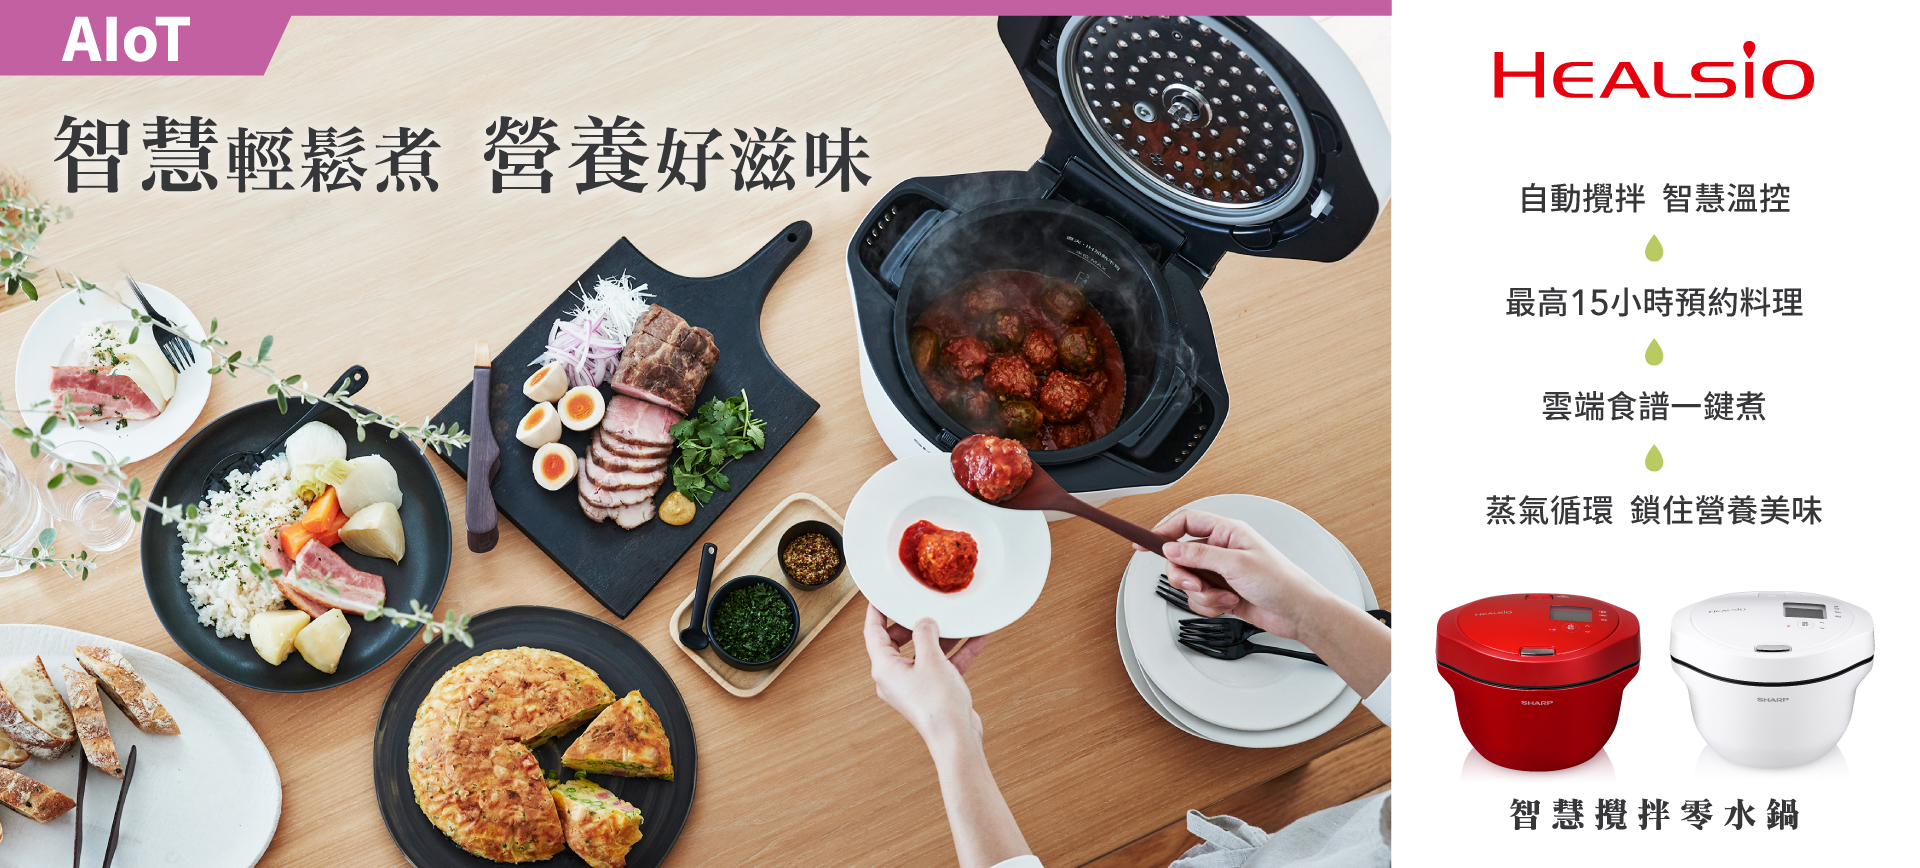 HEALSIO烹調出健康美味生活| SHARP Taiwan